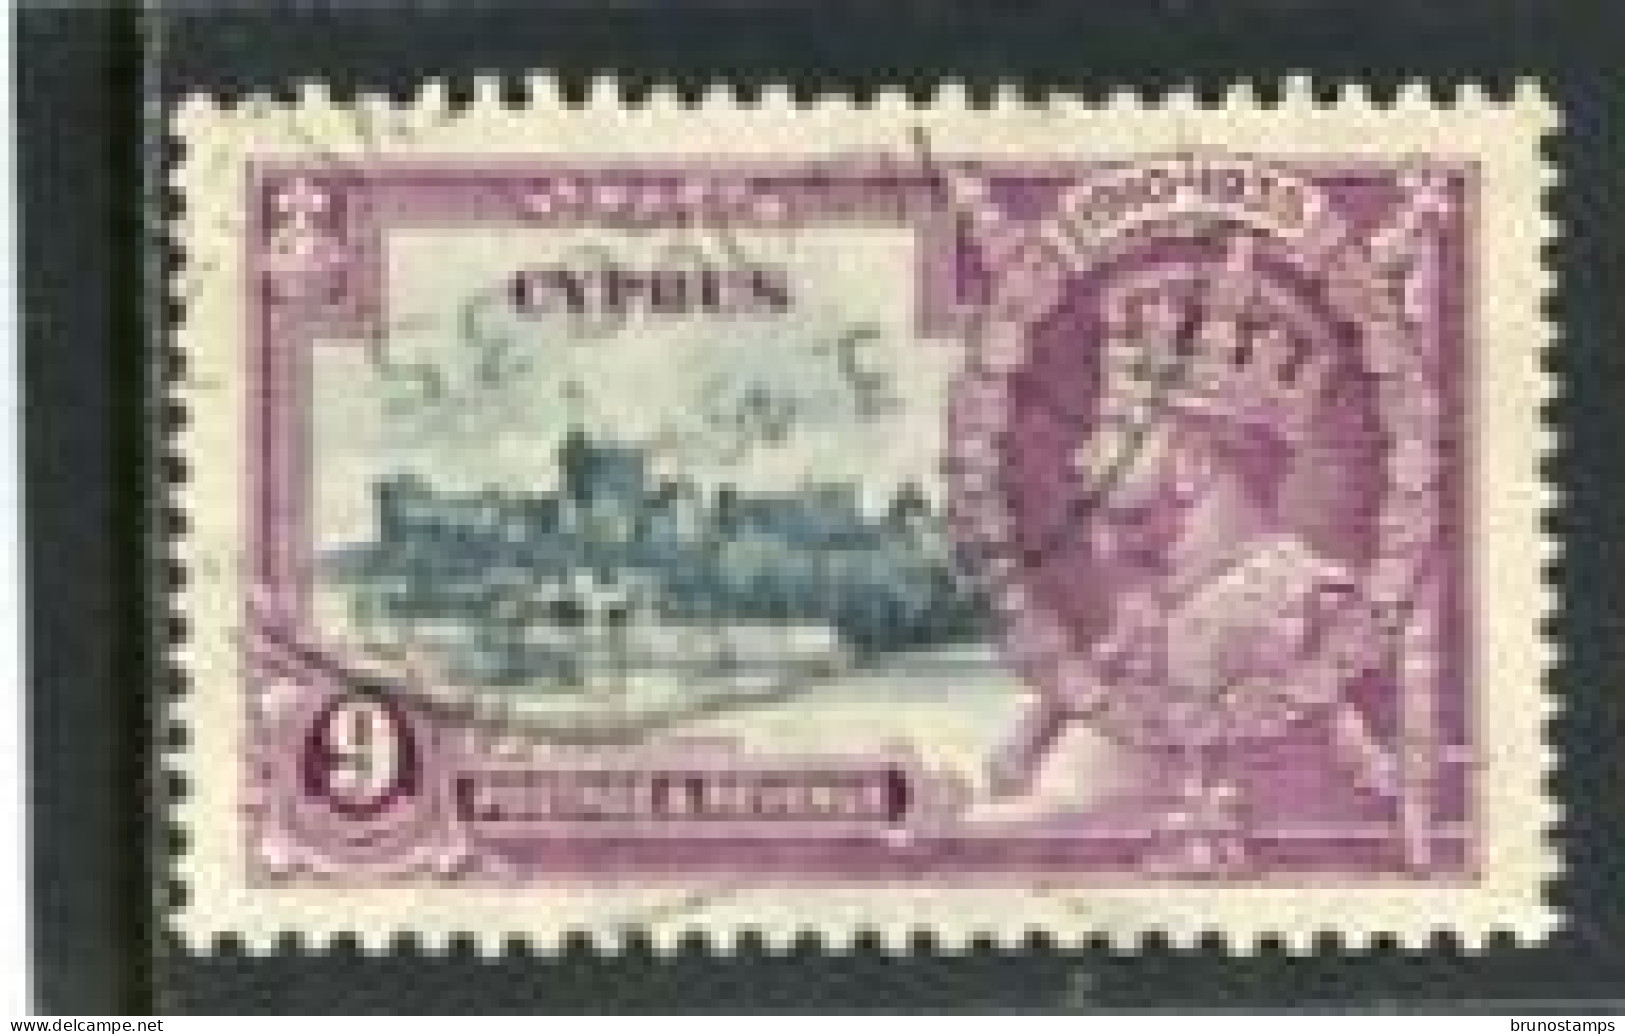 CYPRUS - 1935  JUBILEE  9 Pi  FINE USED - Cyprus (...-1960)